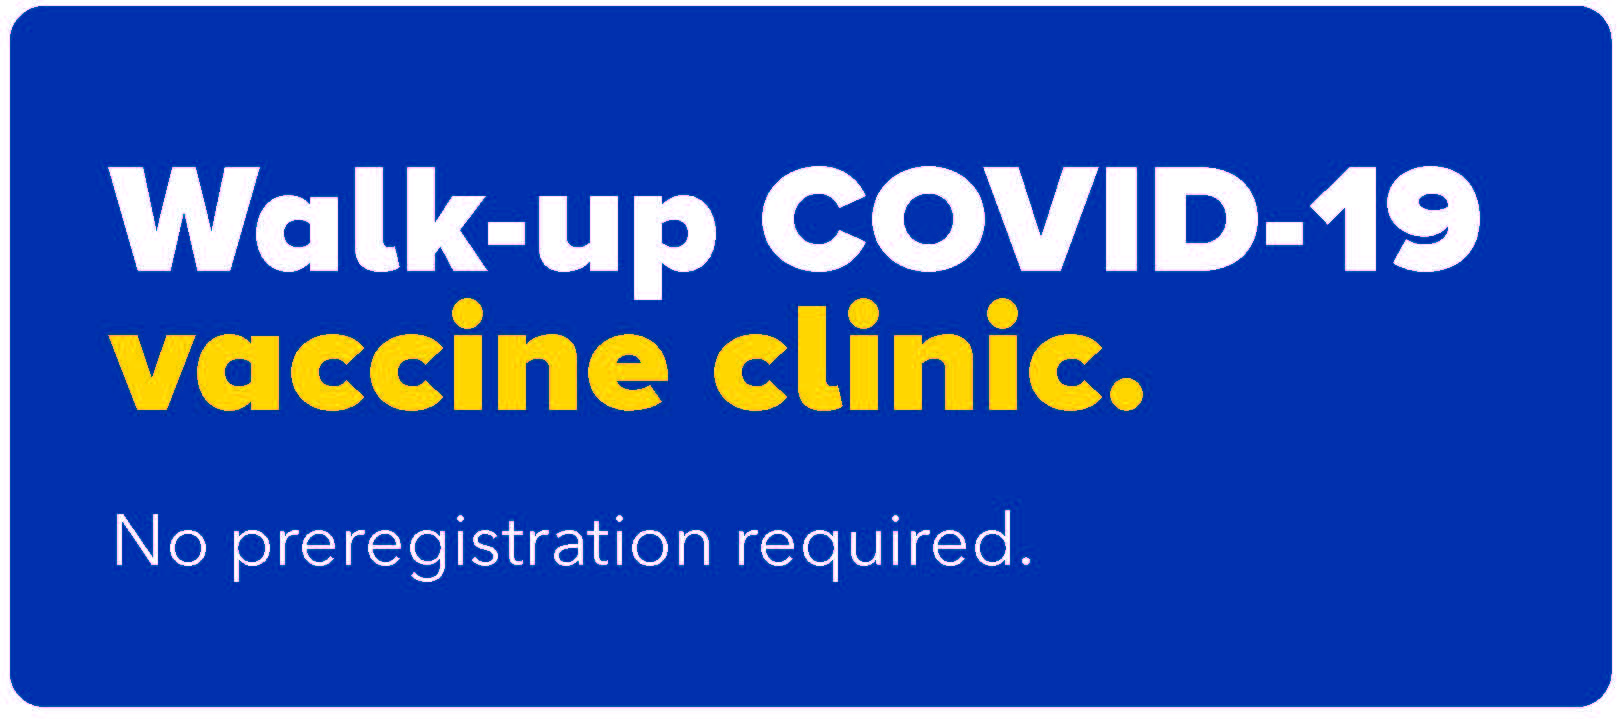 Walk-up COVID-19 Vaccine Clinic, No pre-registration required